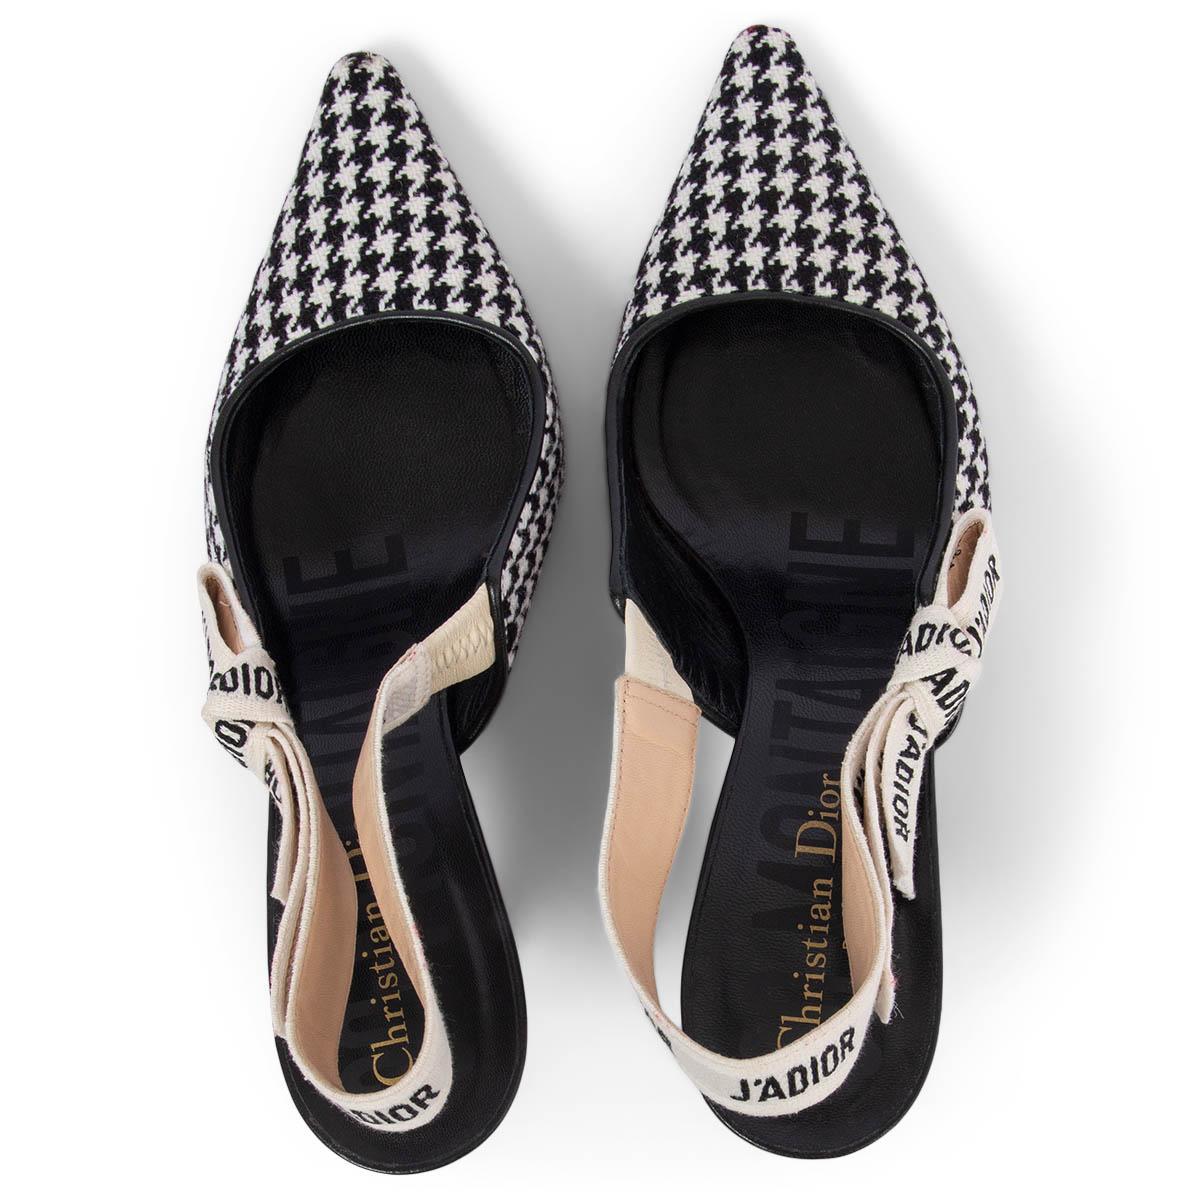 CHRISTIAN DIOR black & white HOUNDSOOTH J'ADIOR POINTED TOE Slingbacks Shoes 37 1